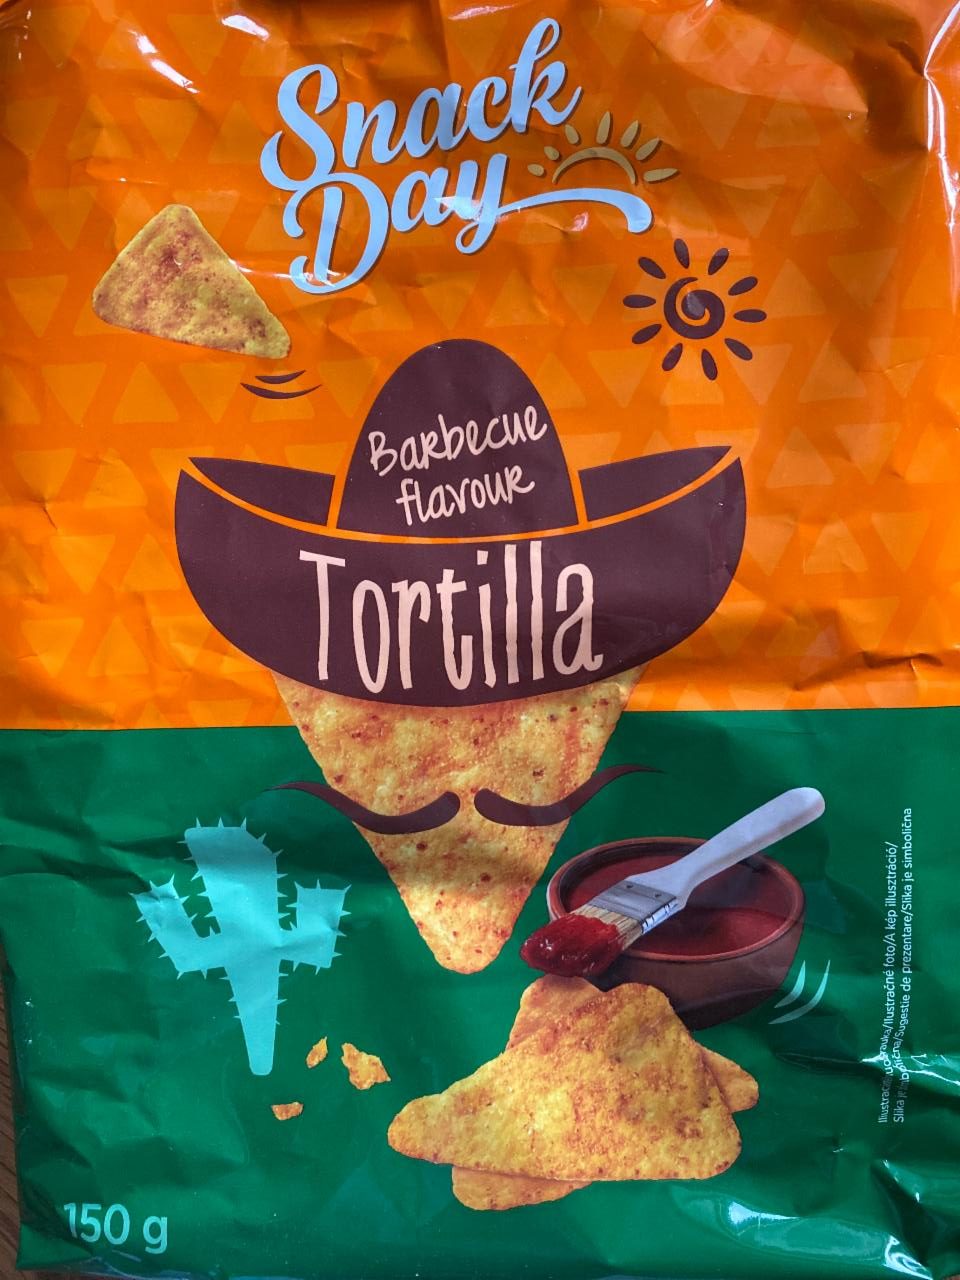 Képek - Snack day tortilla chips bbq 